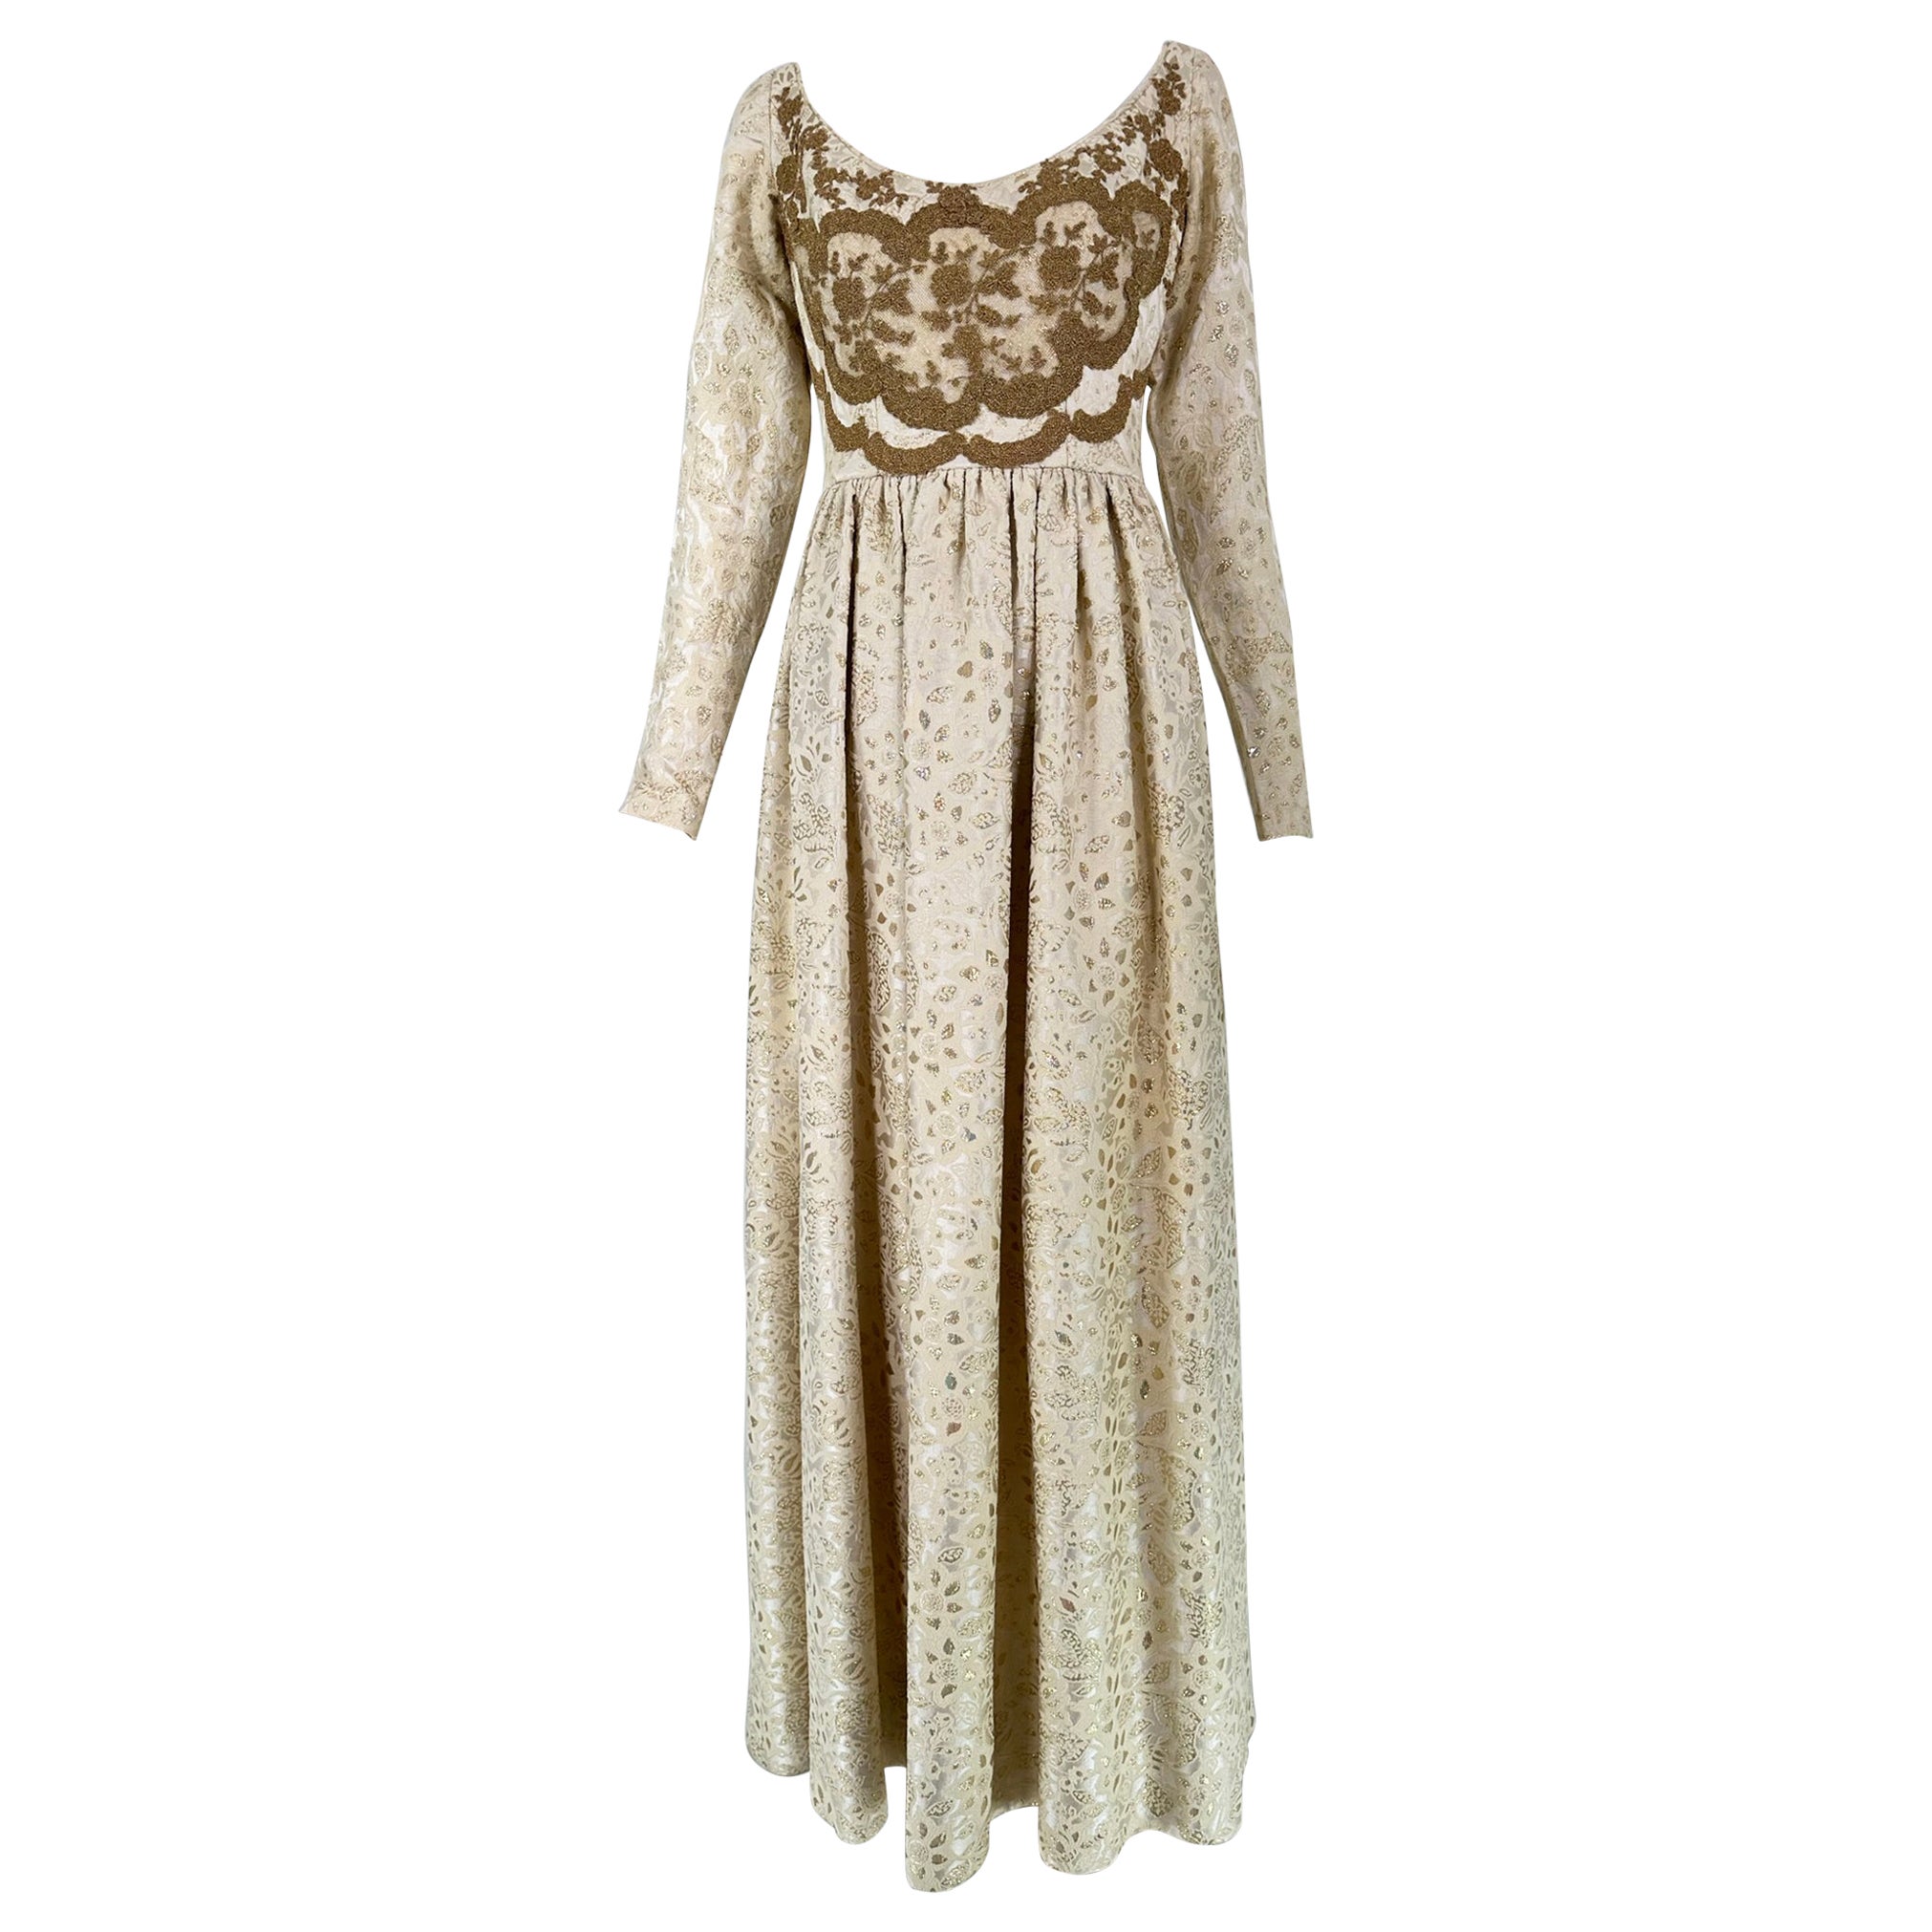 Galitizne Couture Renaissance Style Gown in Cream & Gold Metallic Brocade 1970s For Sale